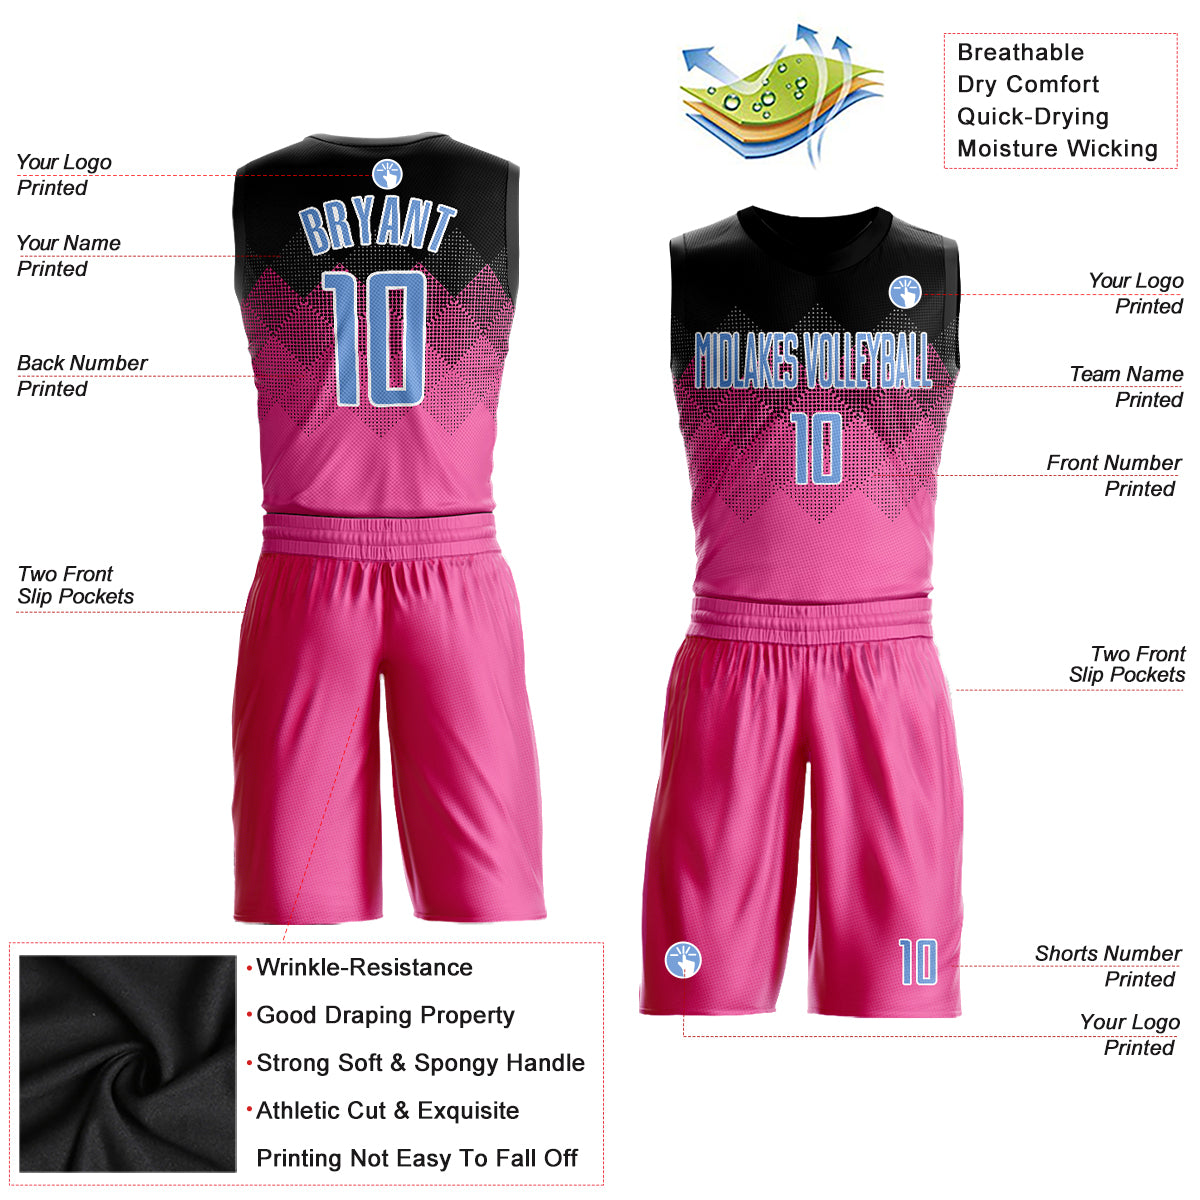 FANSIDEA Custom Black White Pinstripe Pink-Light Blue Authentic Basketball Jersey Men's Size:M